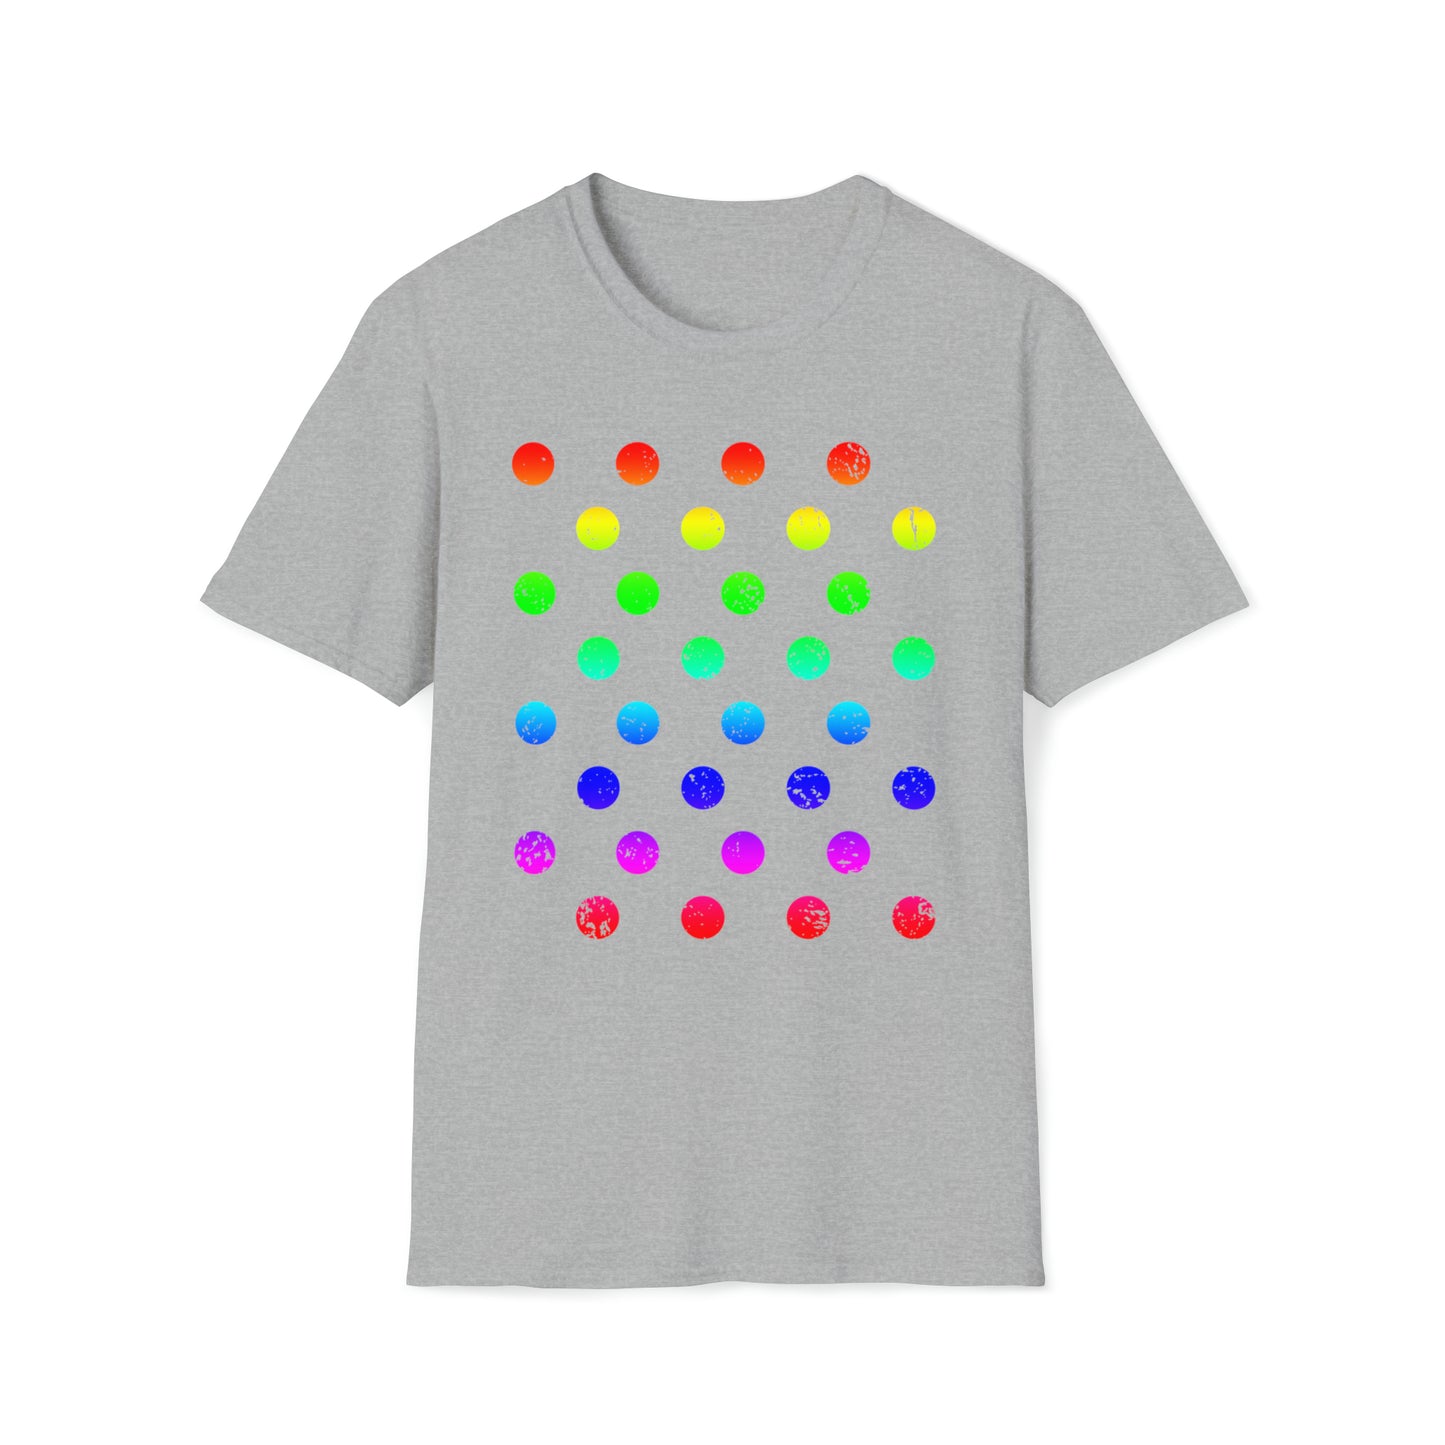 September 15th Retro Distressed Dot T-Shirt: Vintage Rainbow Design Tee